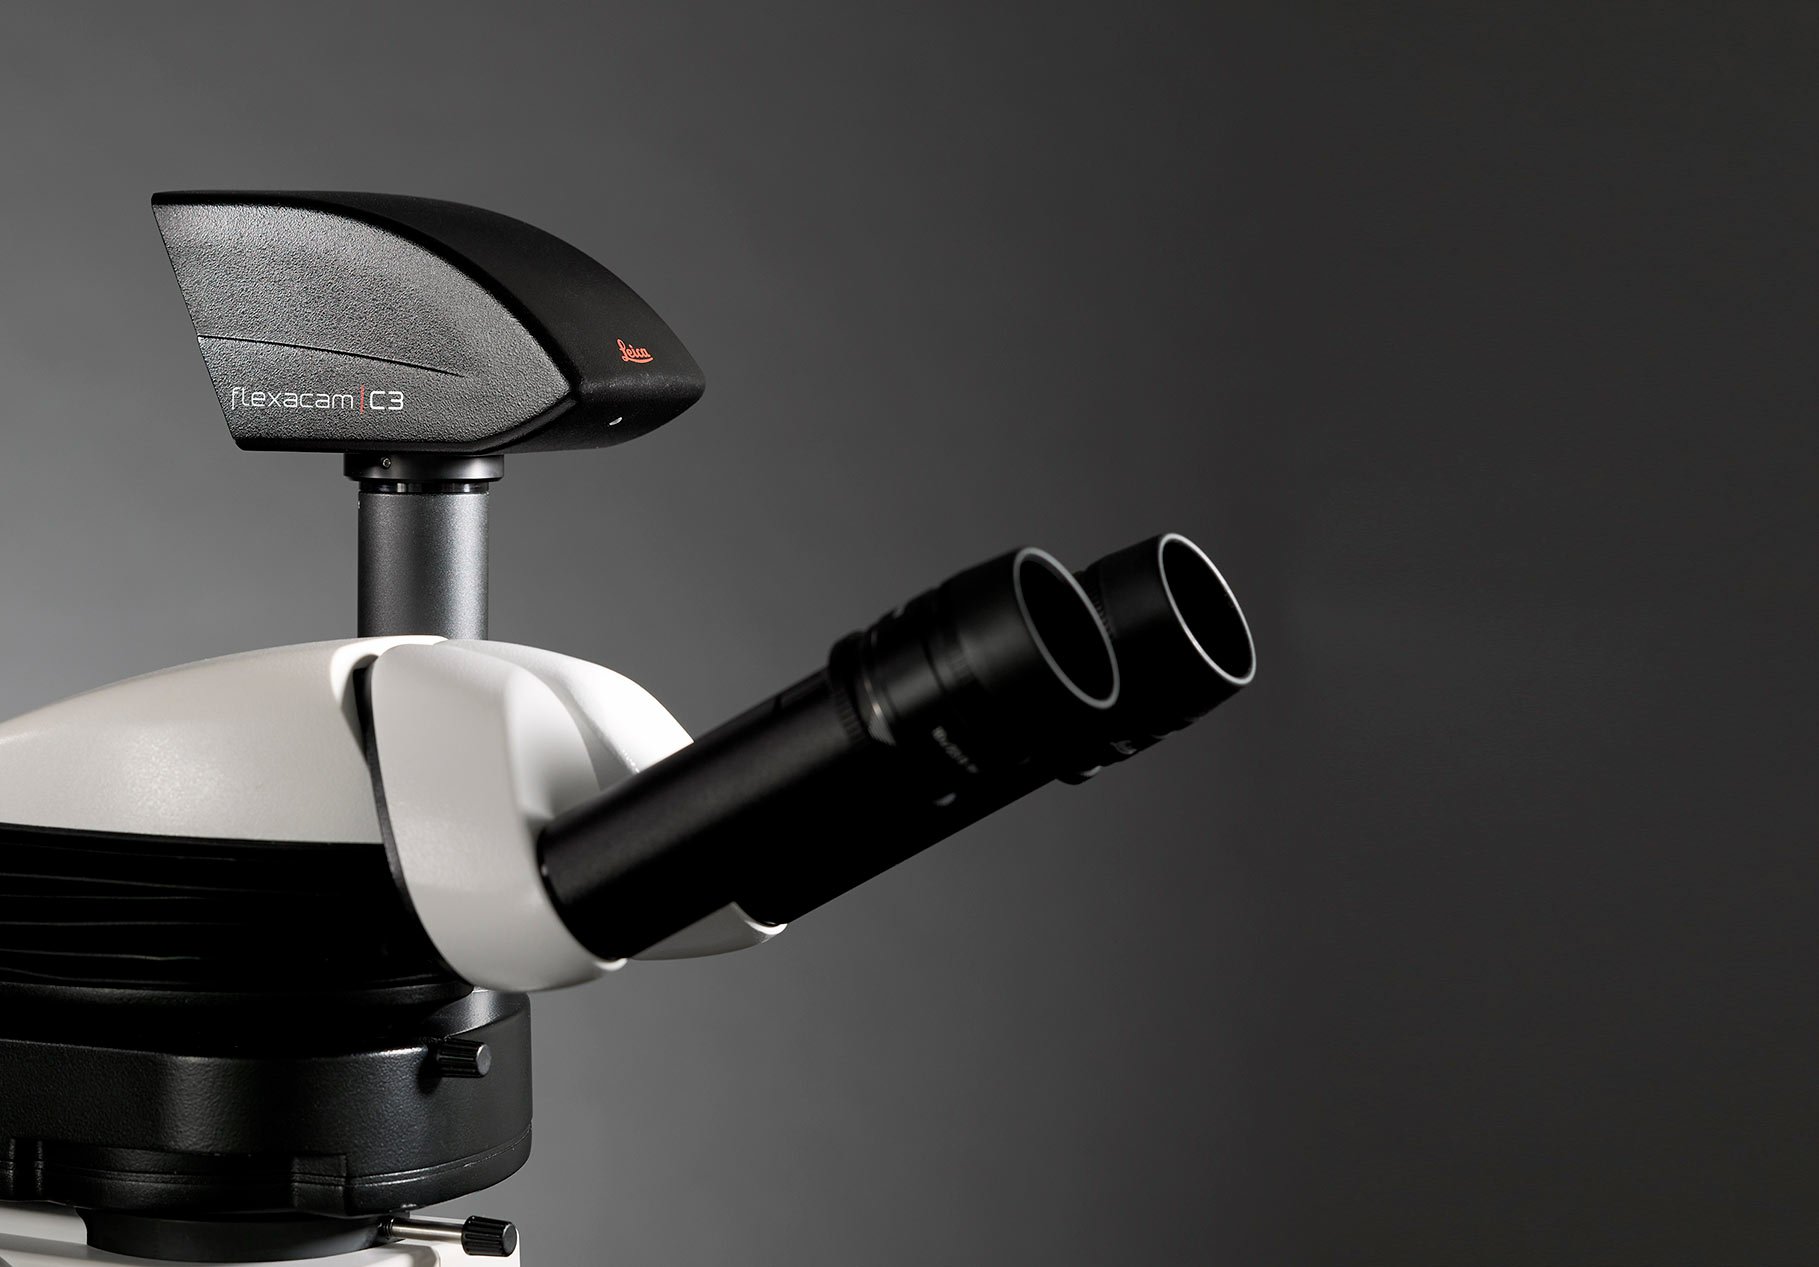 Fotocamera per microscopio Leica Flexacam C3 - fornita da IDM Instruments Australia